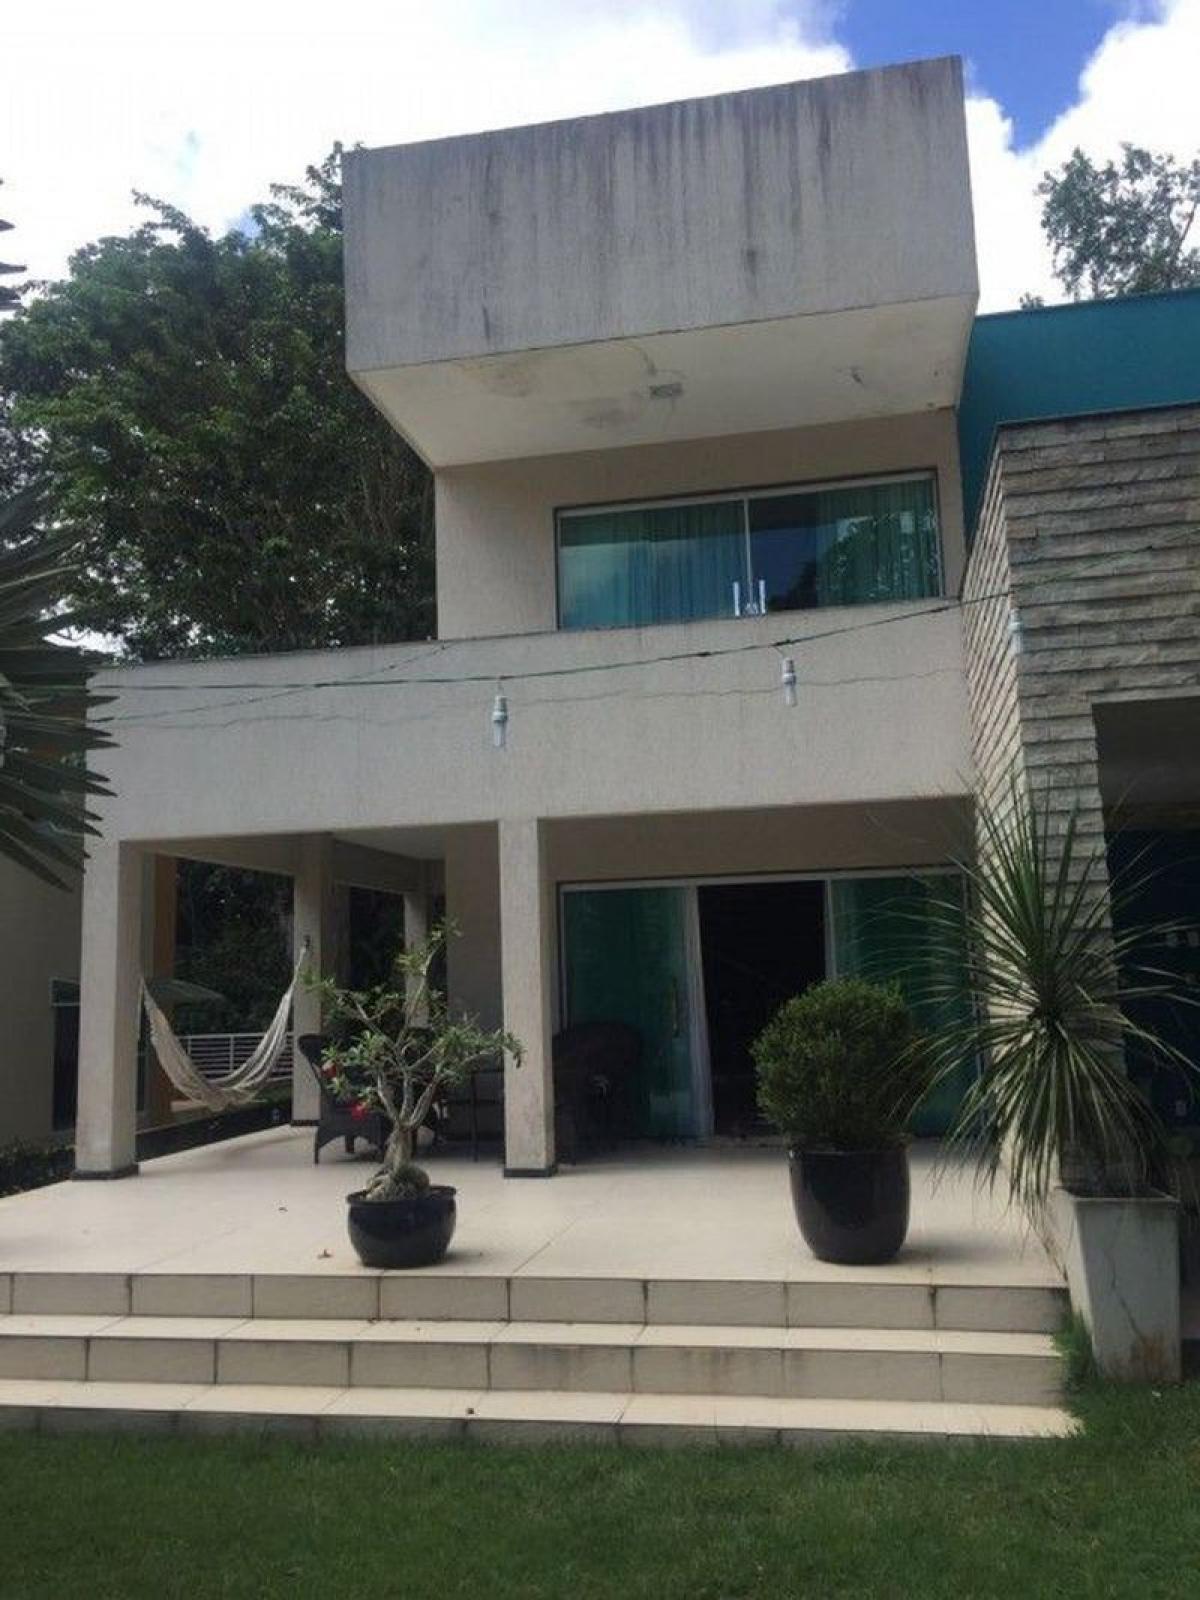 Picture of Home For Sale in Camaragibe, Pernambuco, Brazil